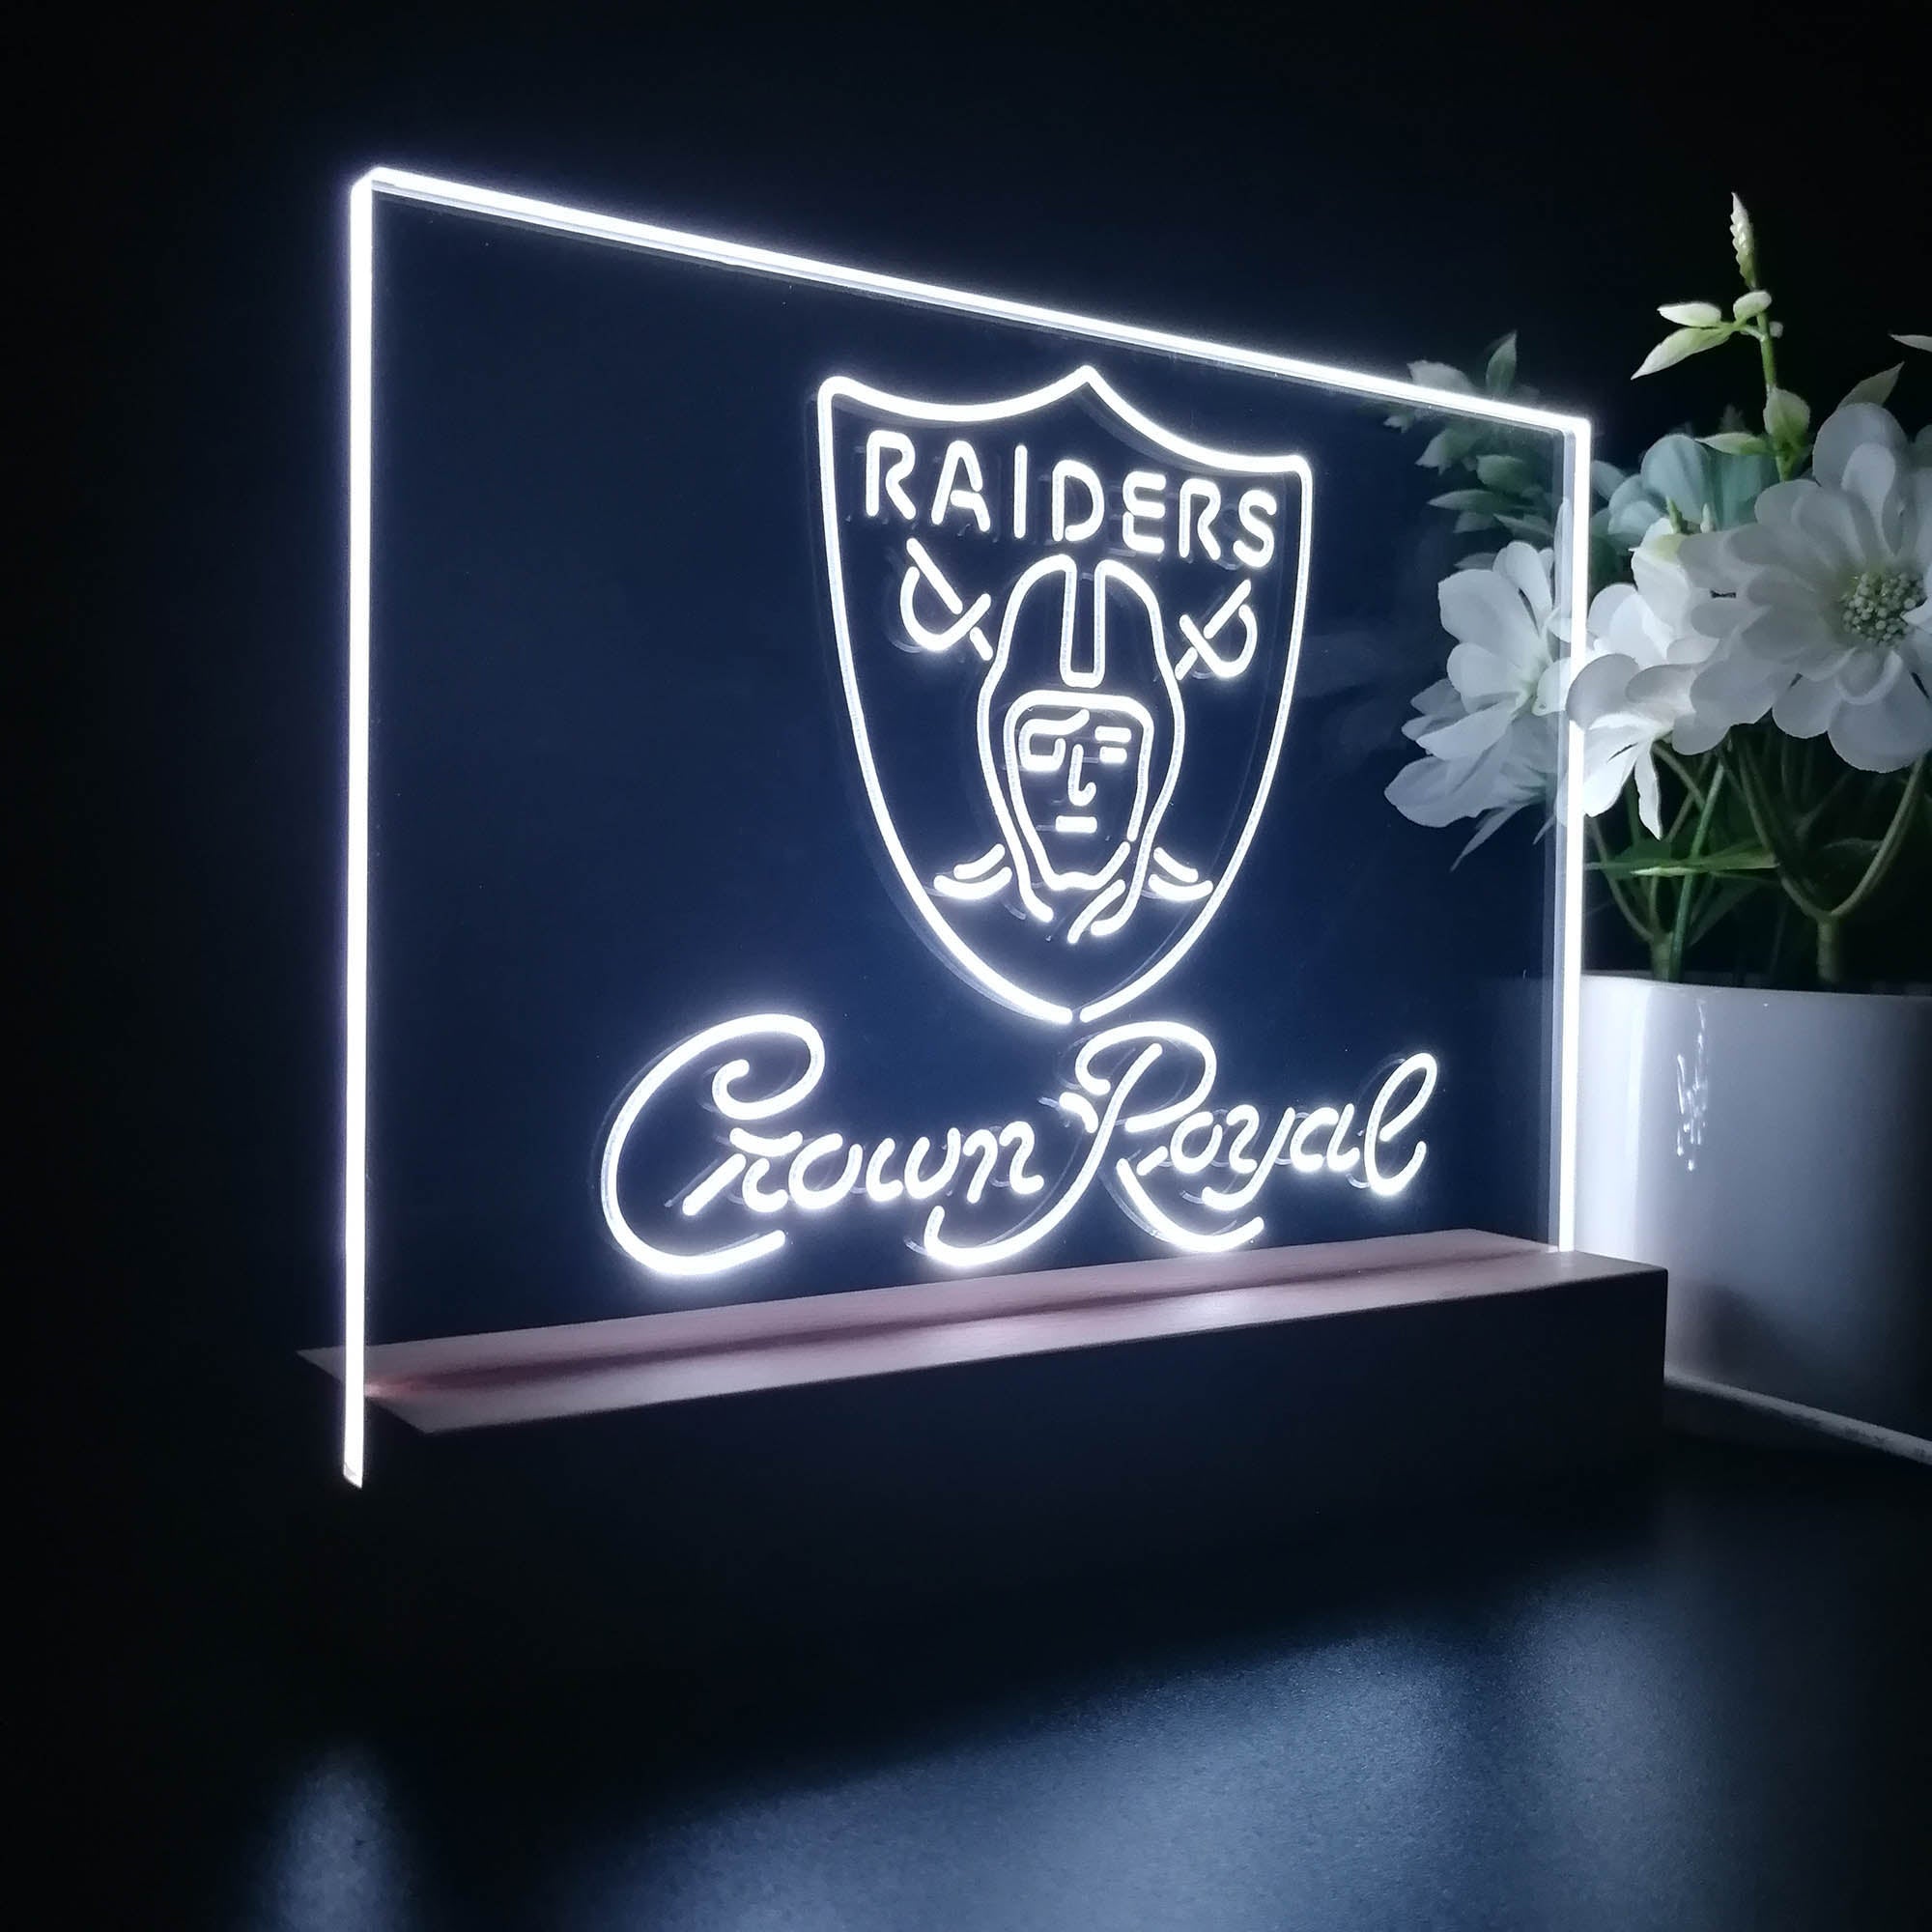 Crown Royal Bar Oakland Raiders Est.1960 Sport Team Night Light 3D Illusion Lamp